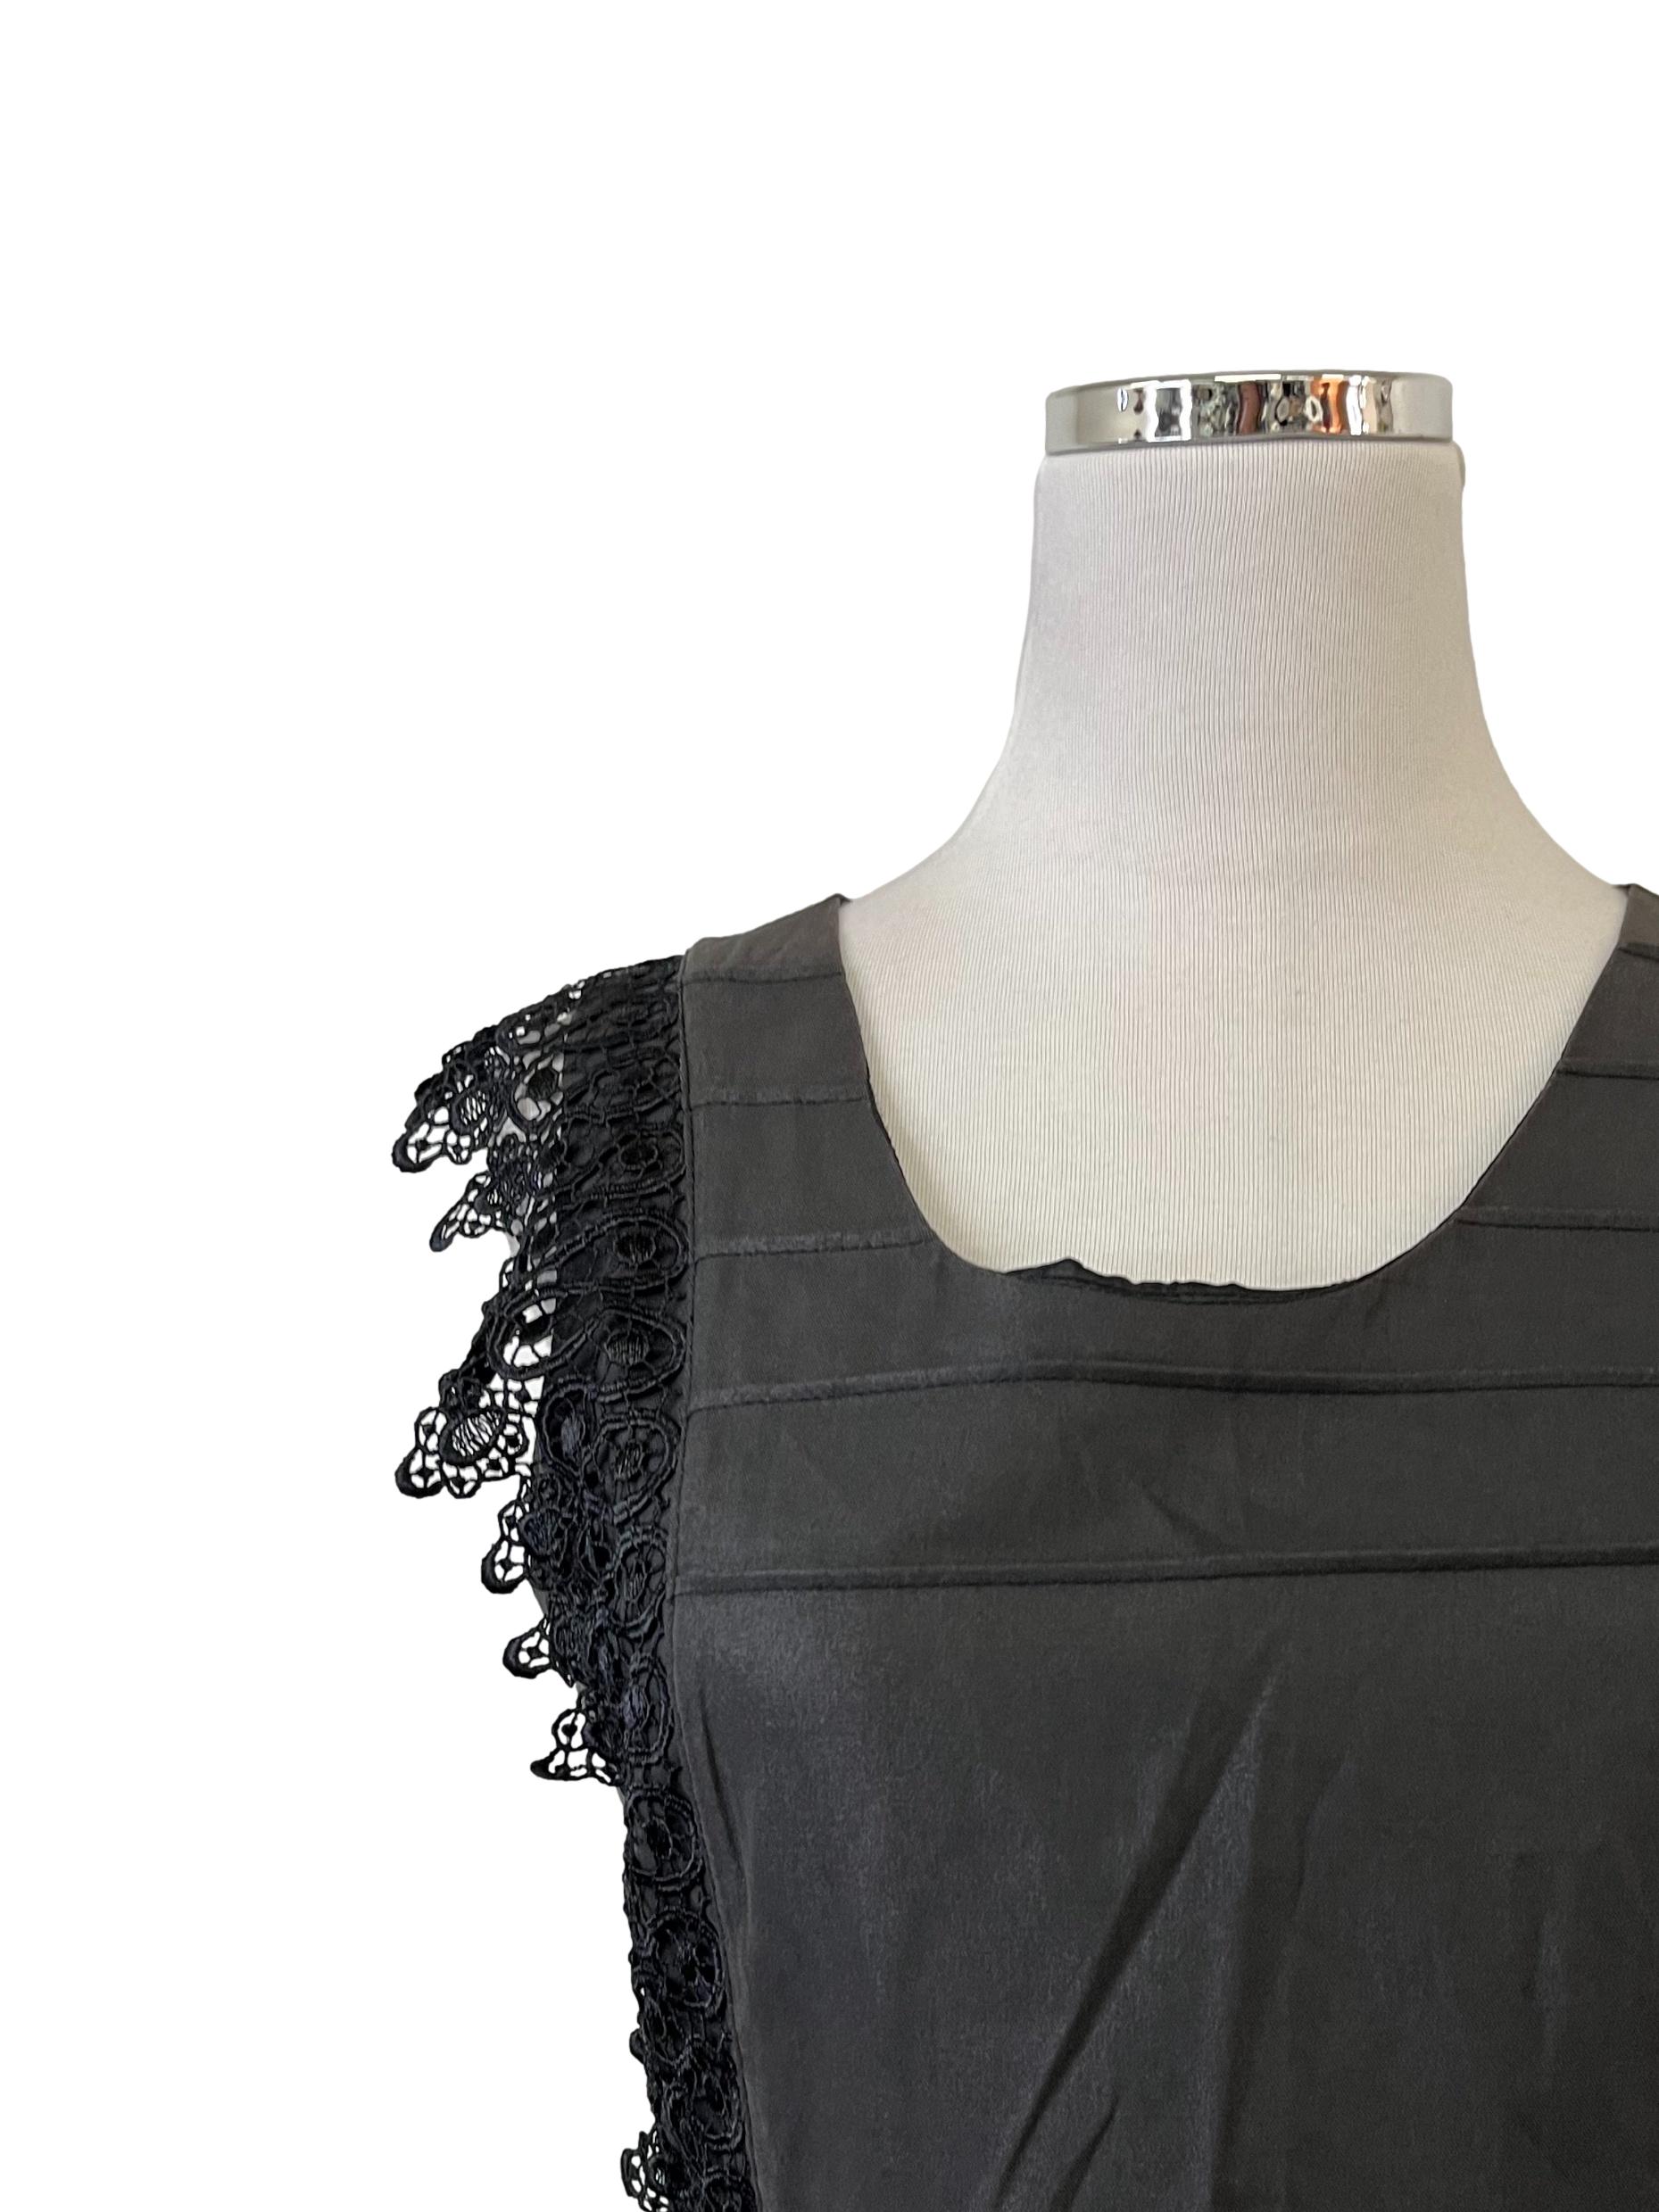 Black A-Lined Dress